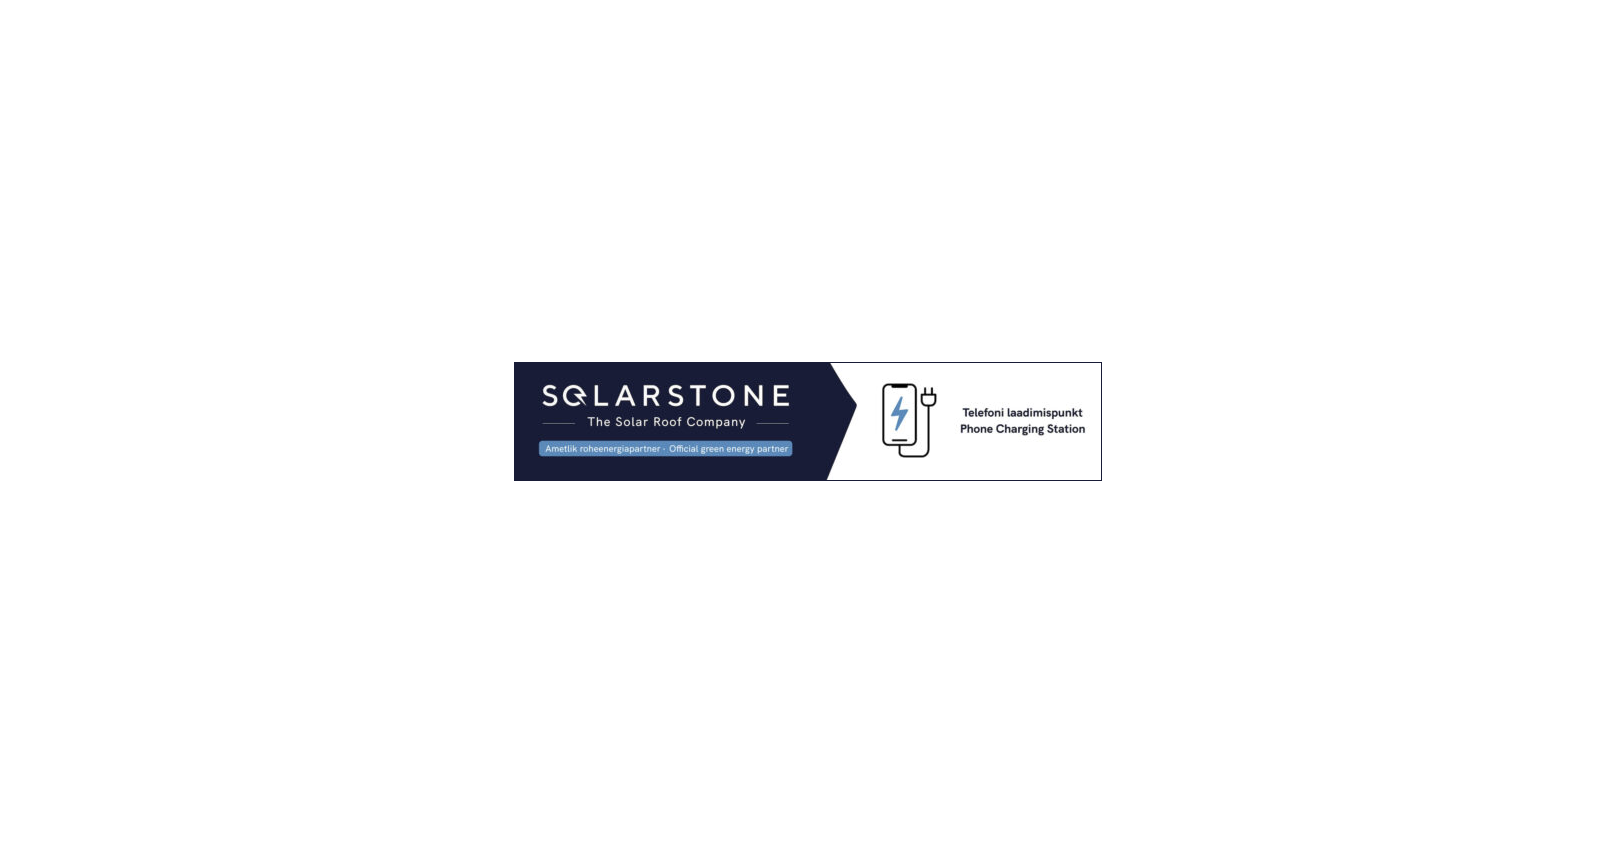 solarstone phone charging station banner